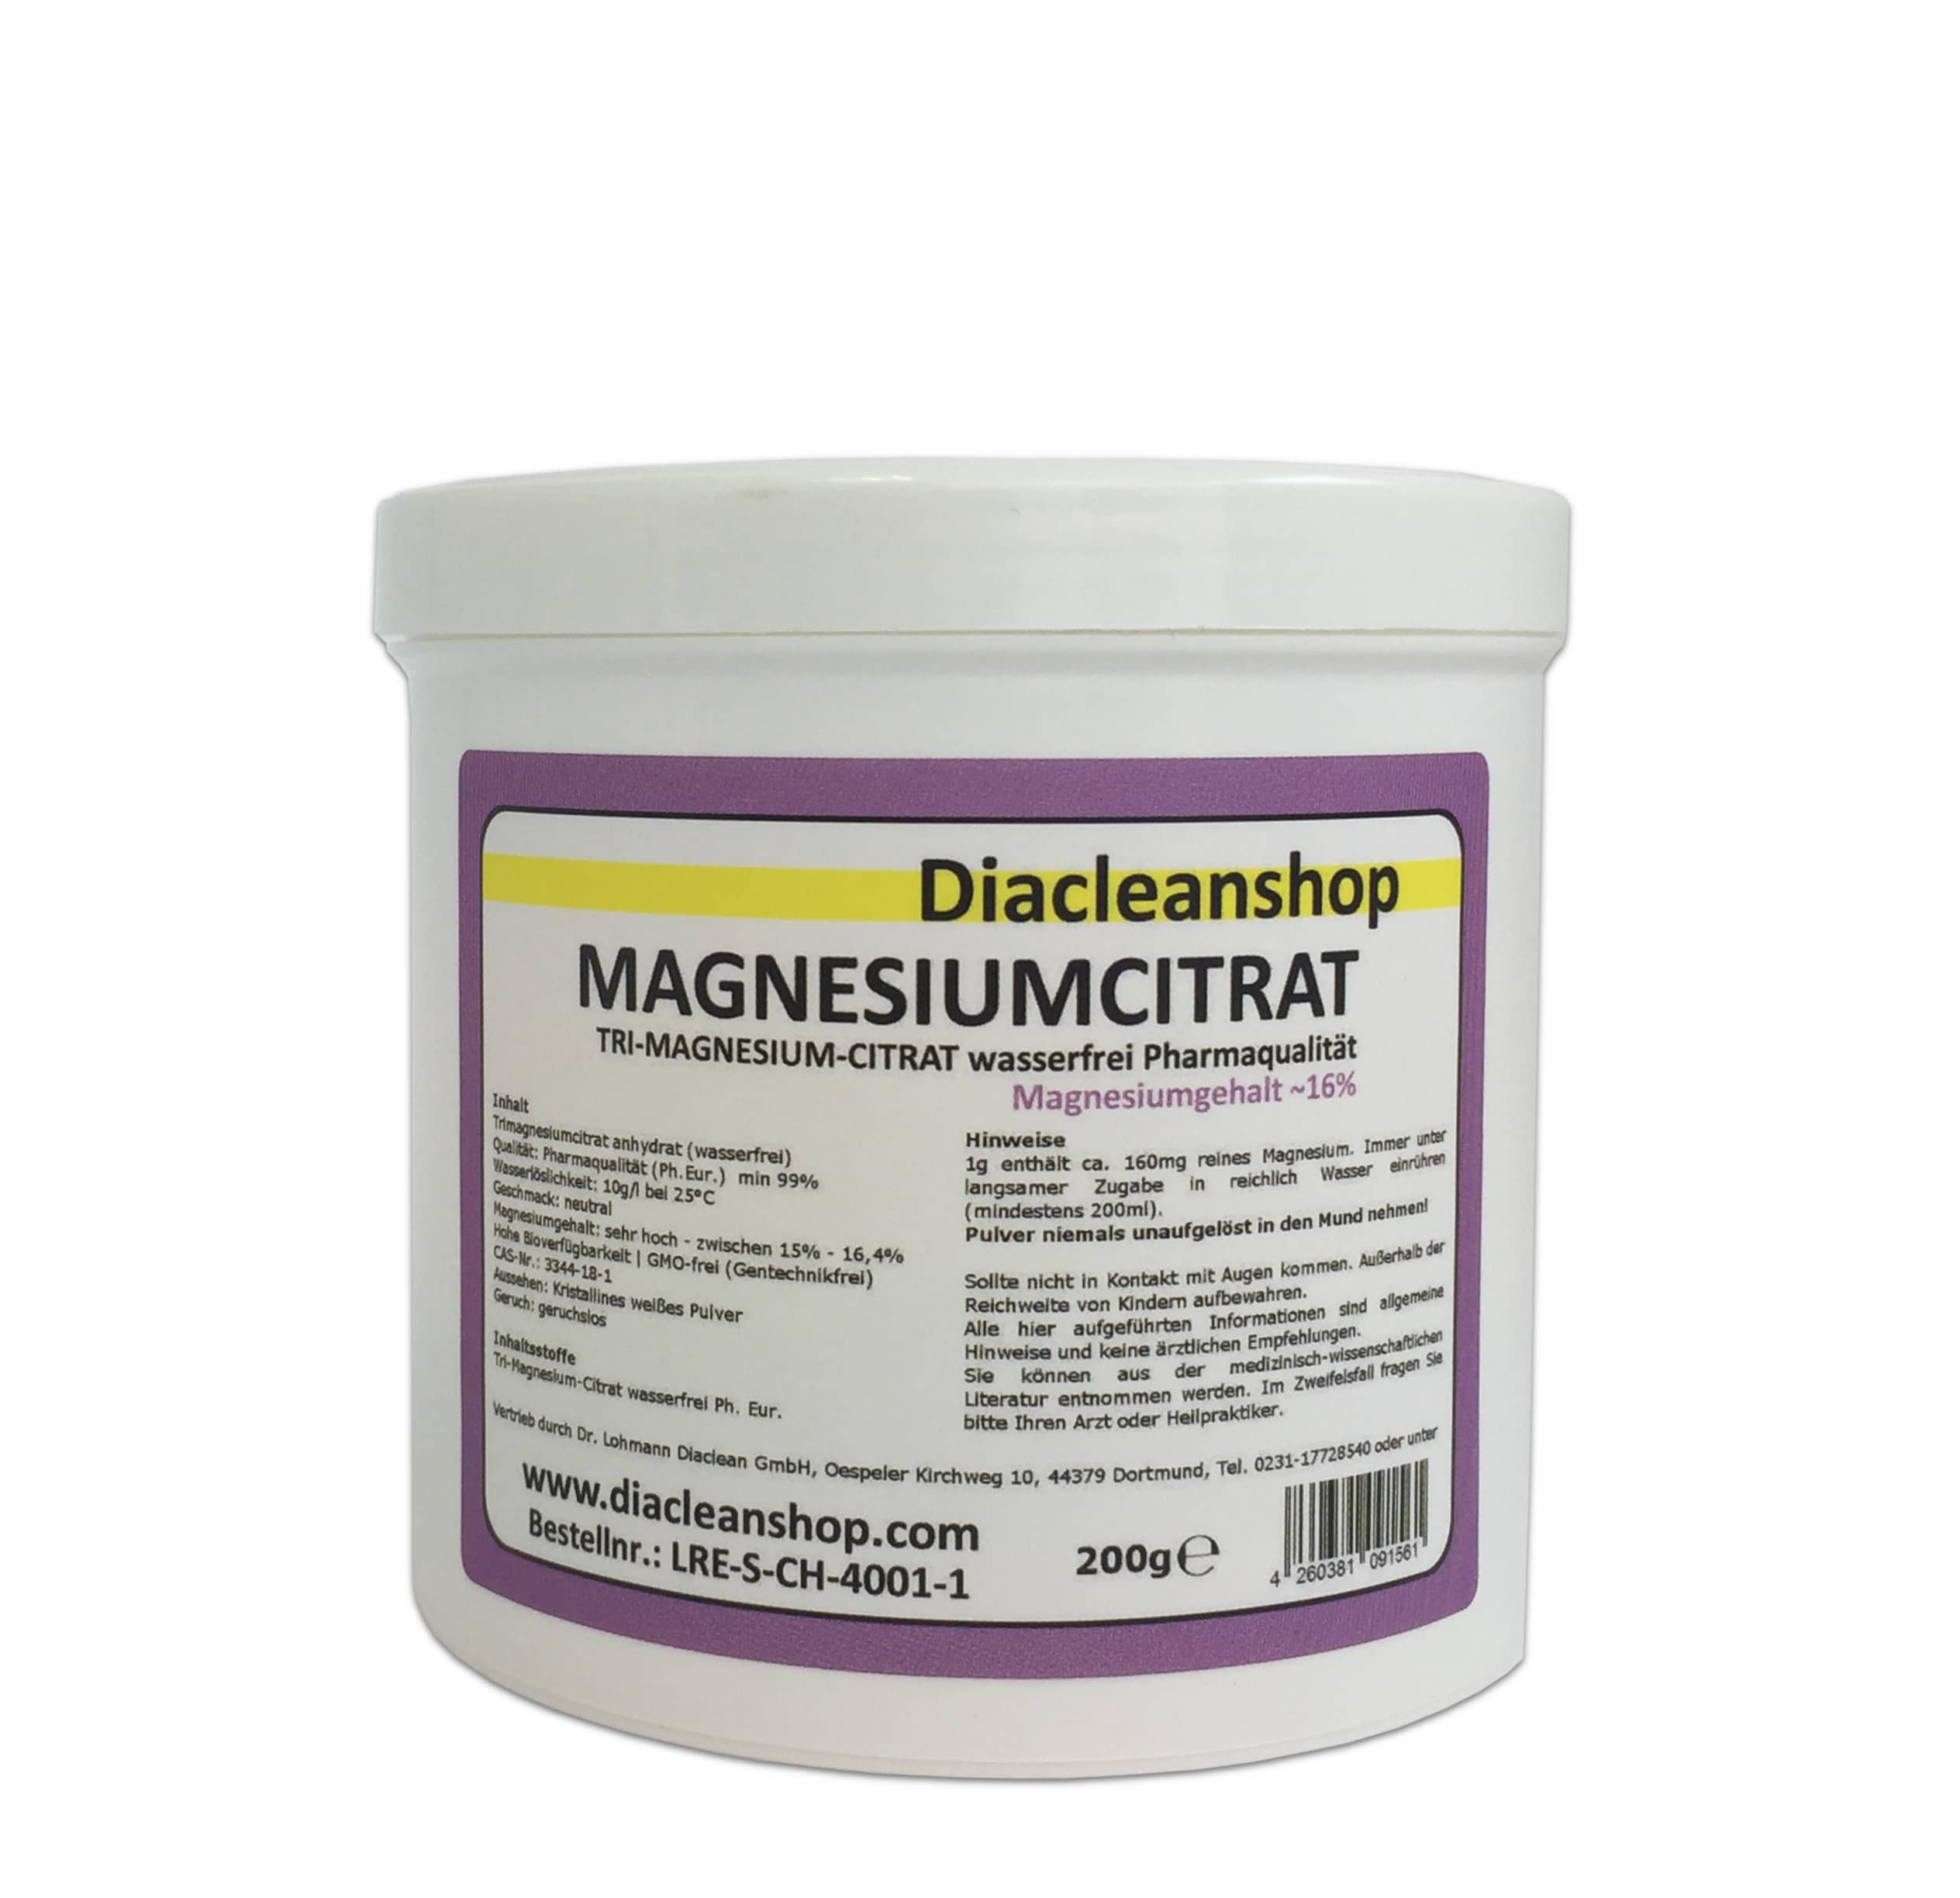 Magnesiumcitrat - Tri-Magnesium-Citrat wasserfrei Pharmaqualität 200g